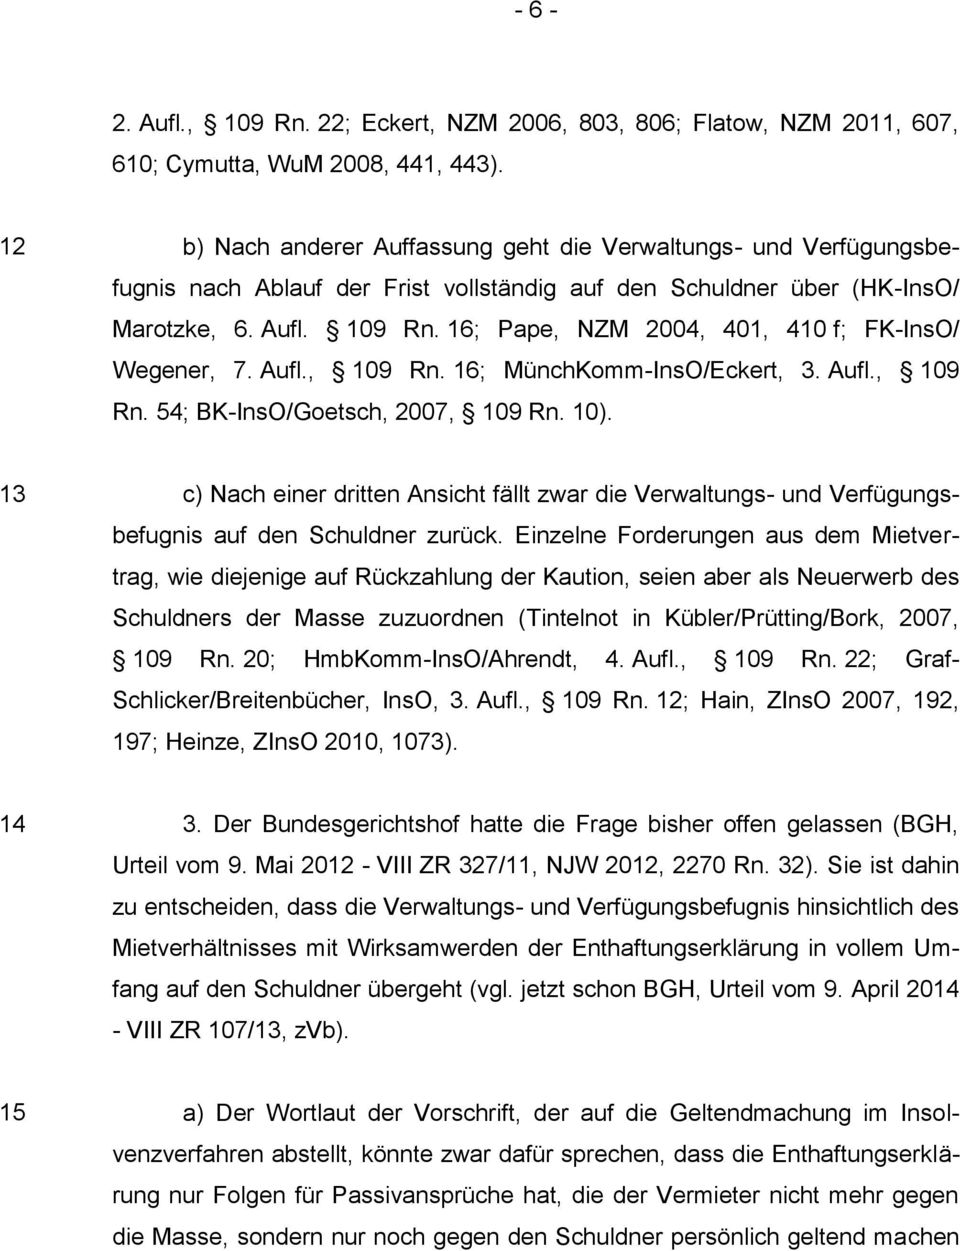 16; Pape, NZM 2004, 401, 410 f; FK-InsO/ Wegener, 7. Aufl., 109 Rn. 16; MünchKomm-InsO/Eckert, 3. Aufl., 109 Rn. 54; BK-InsO/Goetsch, 2007, 109 Rn. 10).